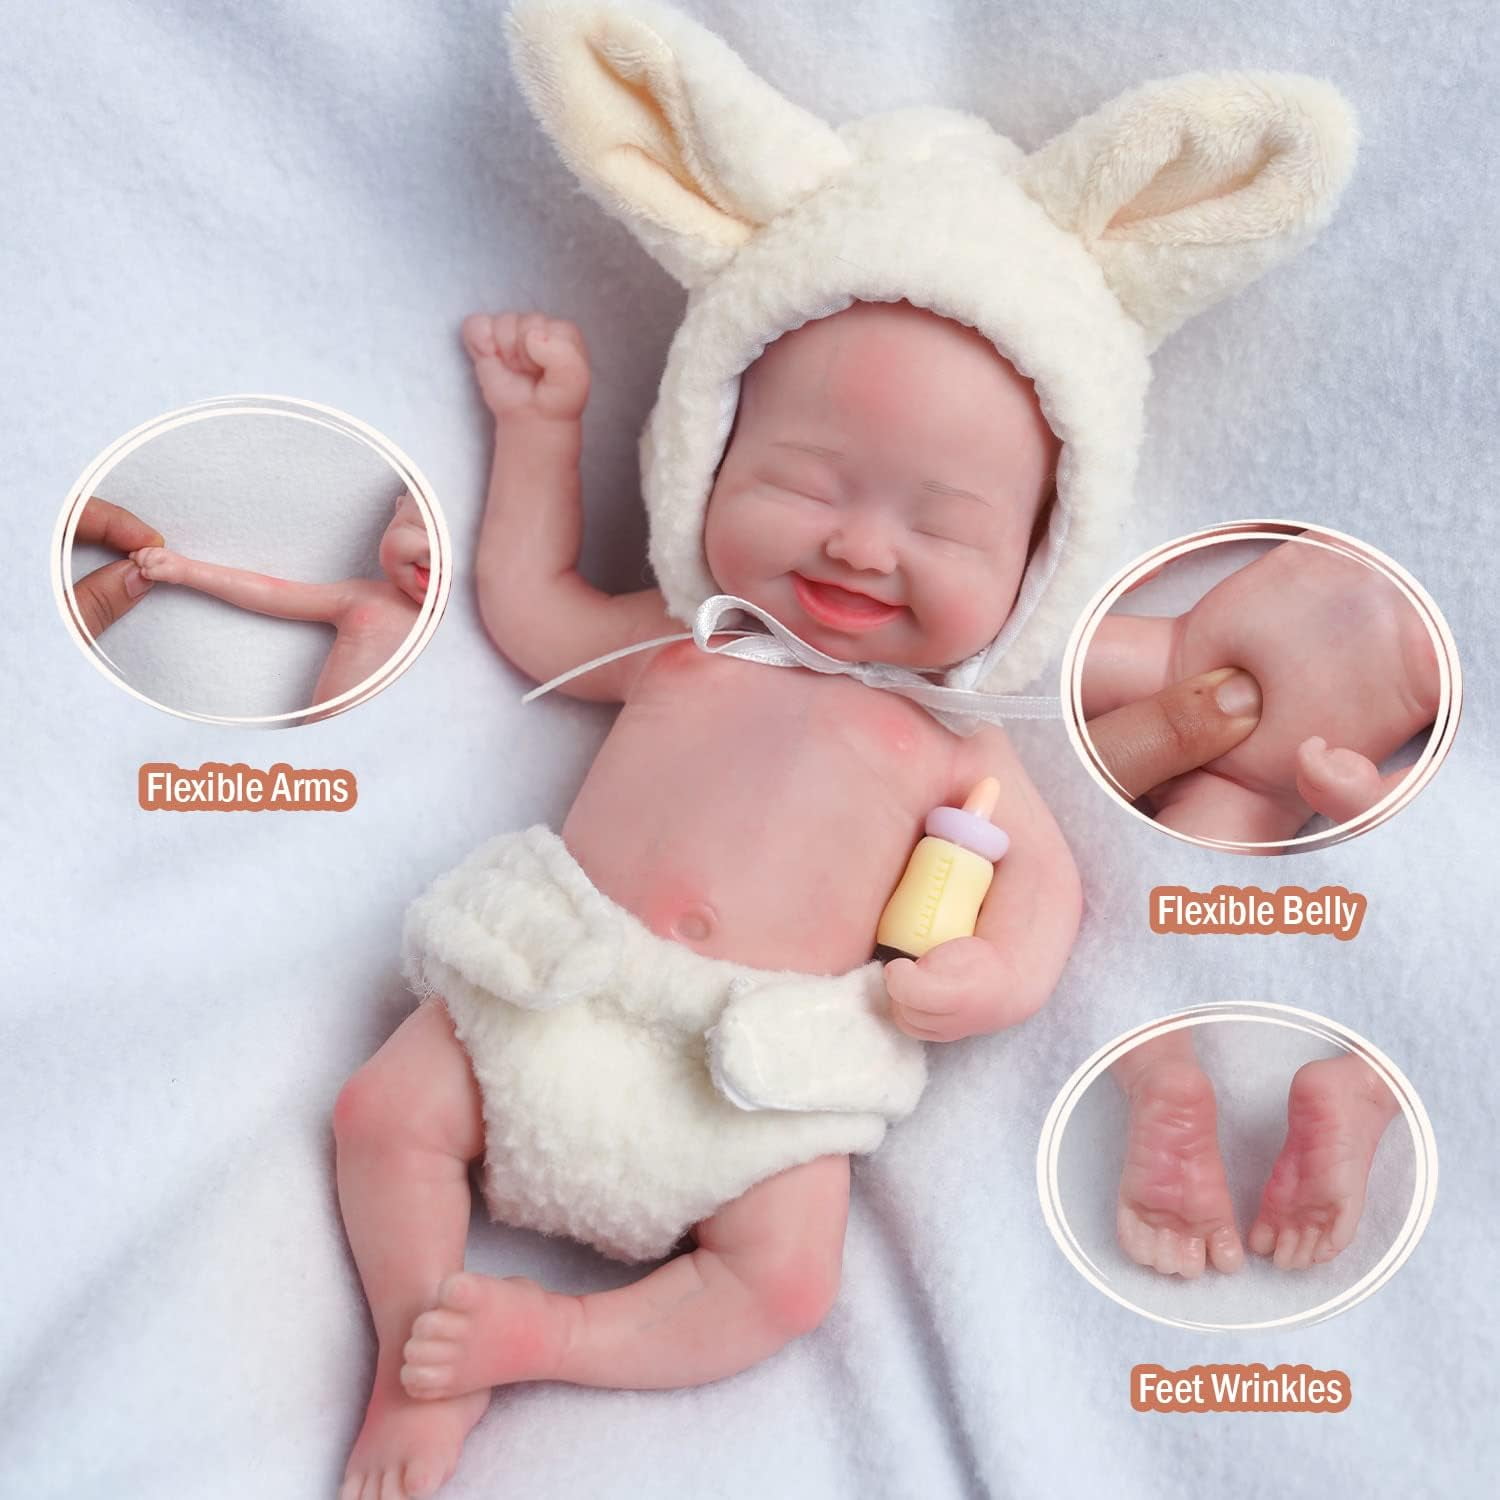 Retrok 8inch Mini Silicone Reborn Baby Dolls Boy Realistic Newborn Baby  Dolls with Feeding and Clothes Accessories Full Body Silicone Baby Doll for